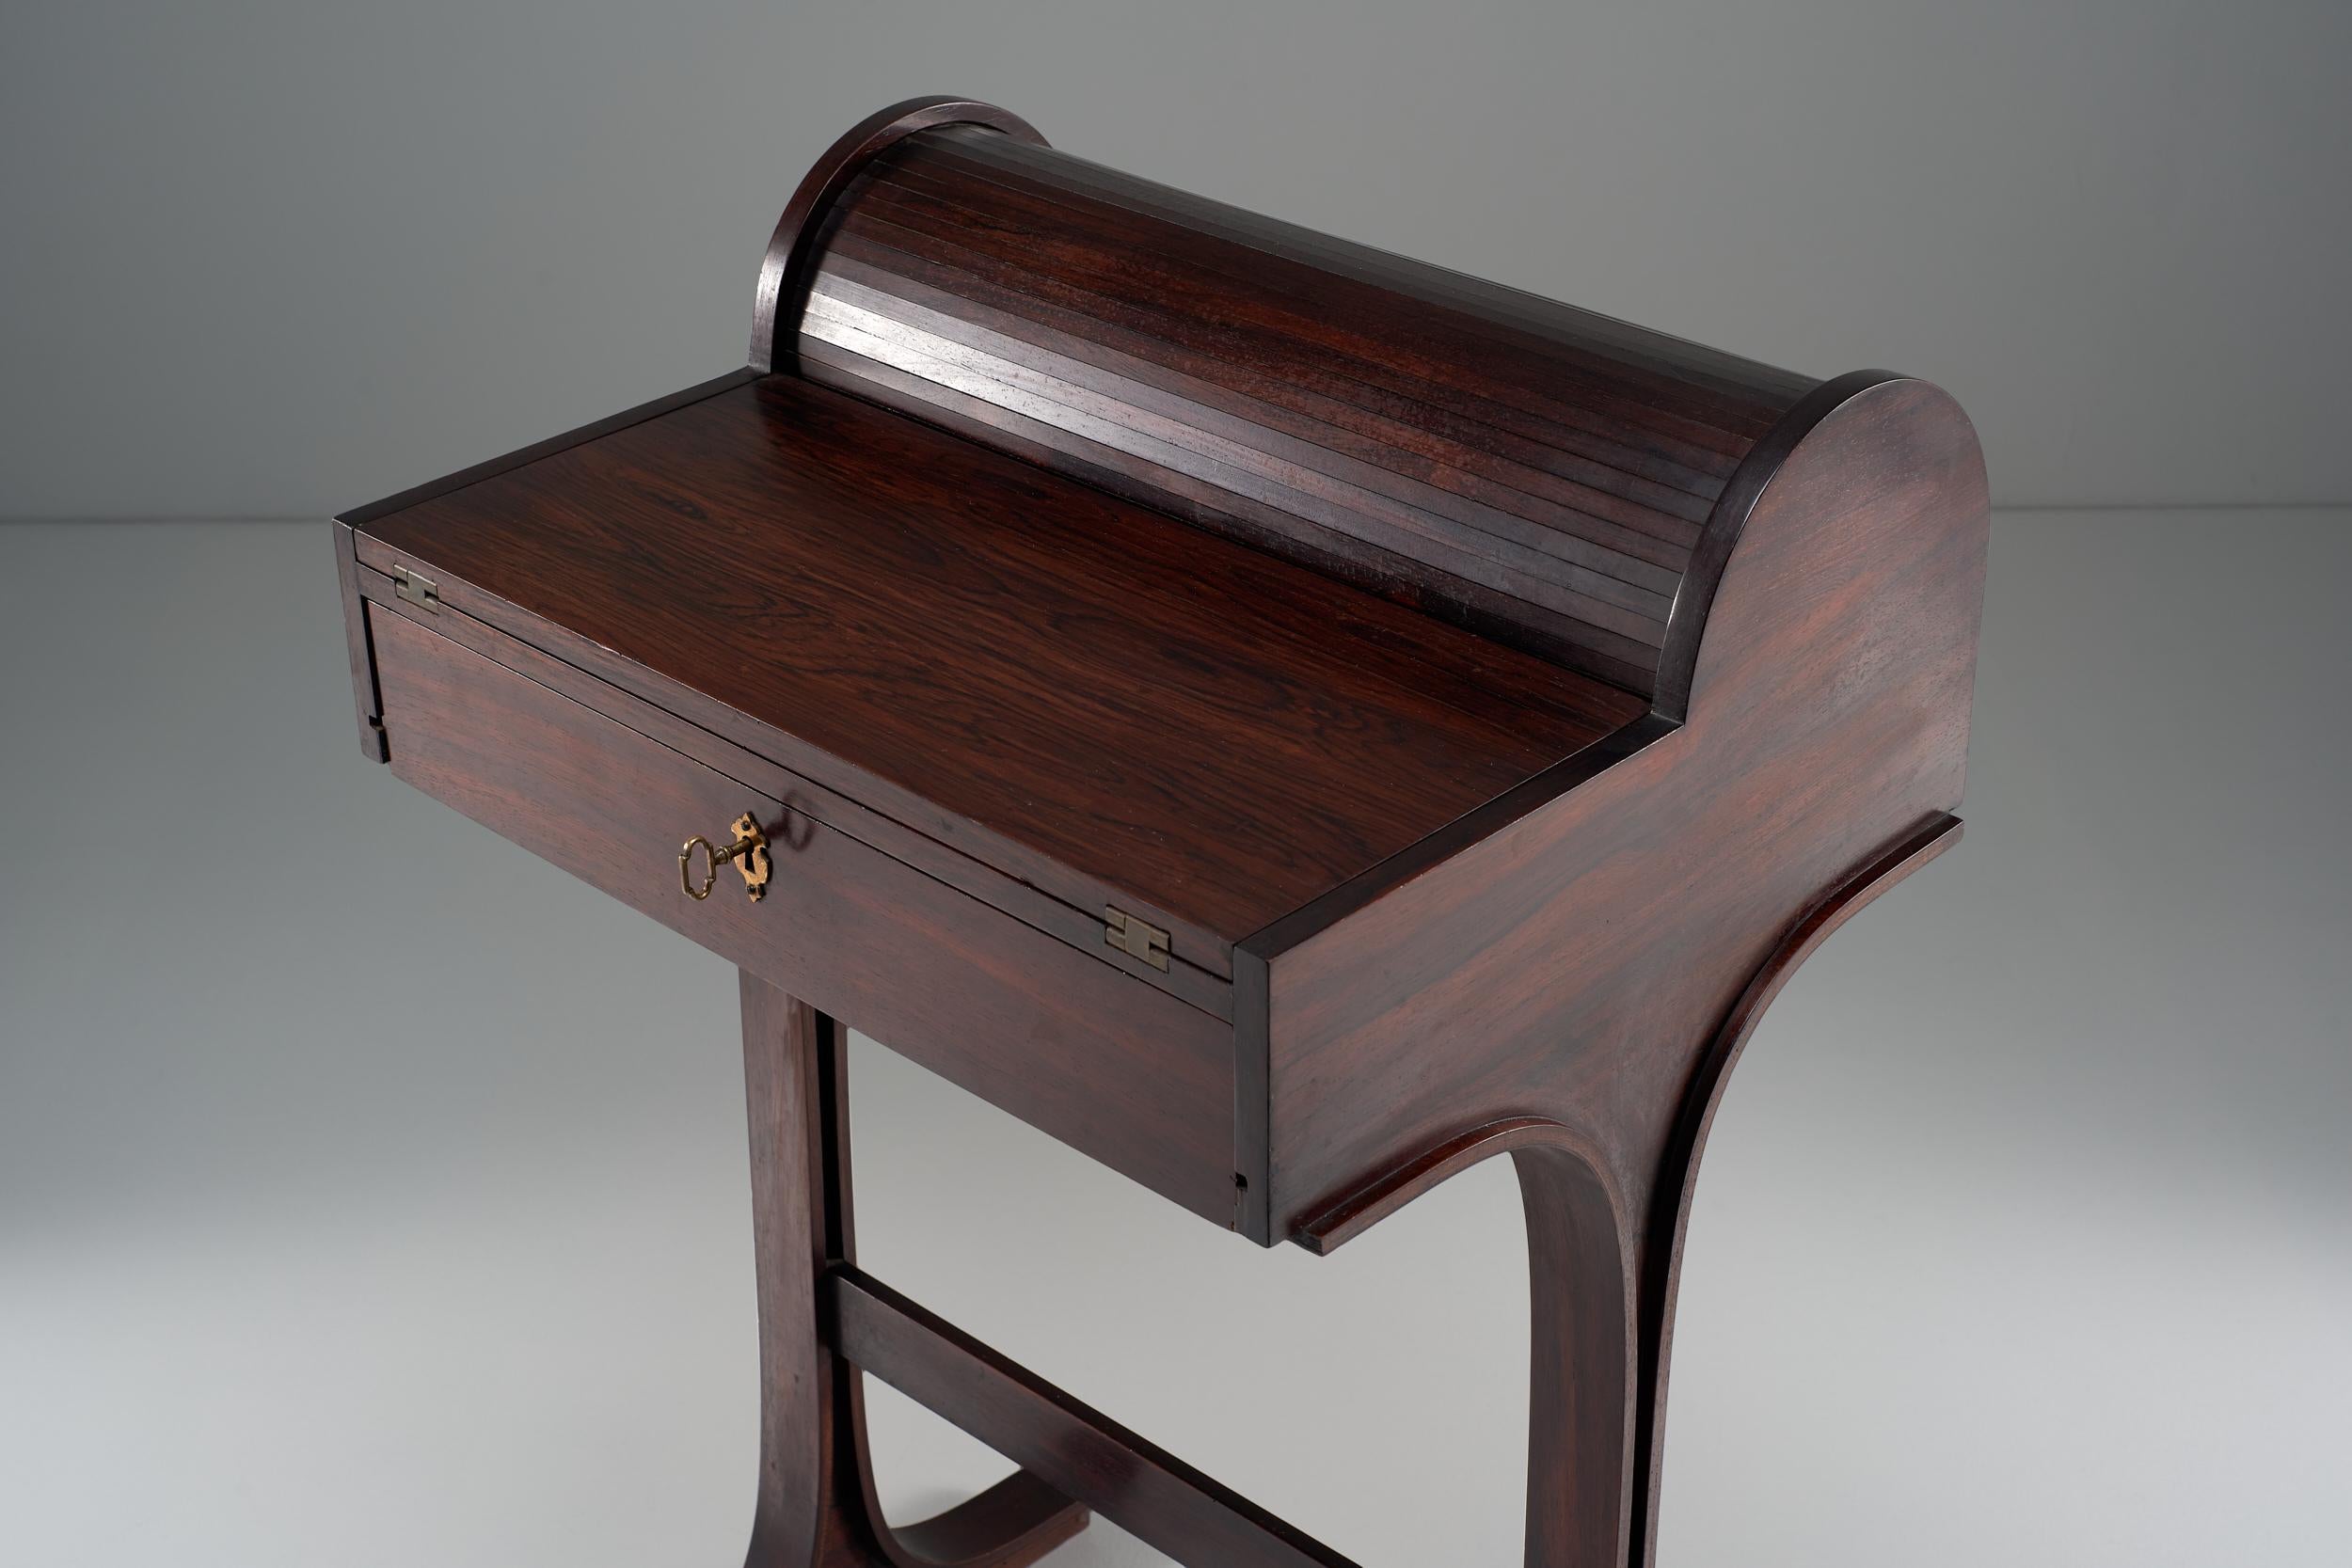 20th Century Gianfranco Frattini Rare Rosewood Rolltop Desk for Bernini, Italian Design 1960s